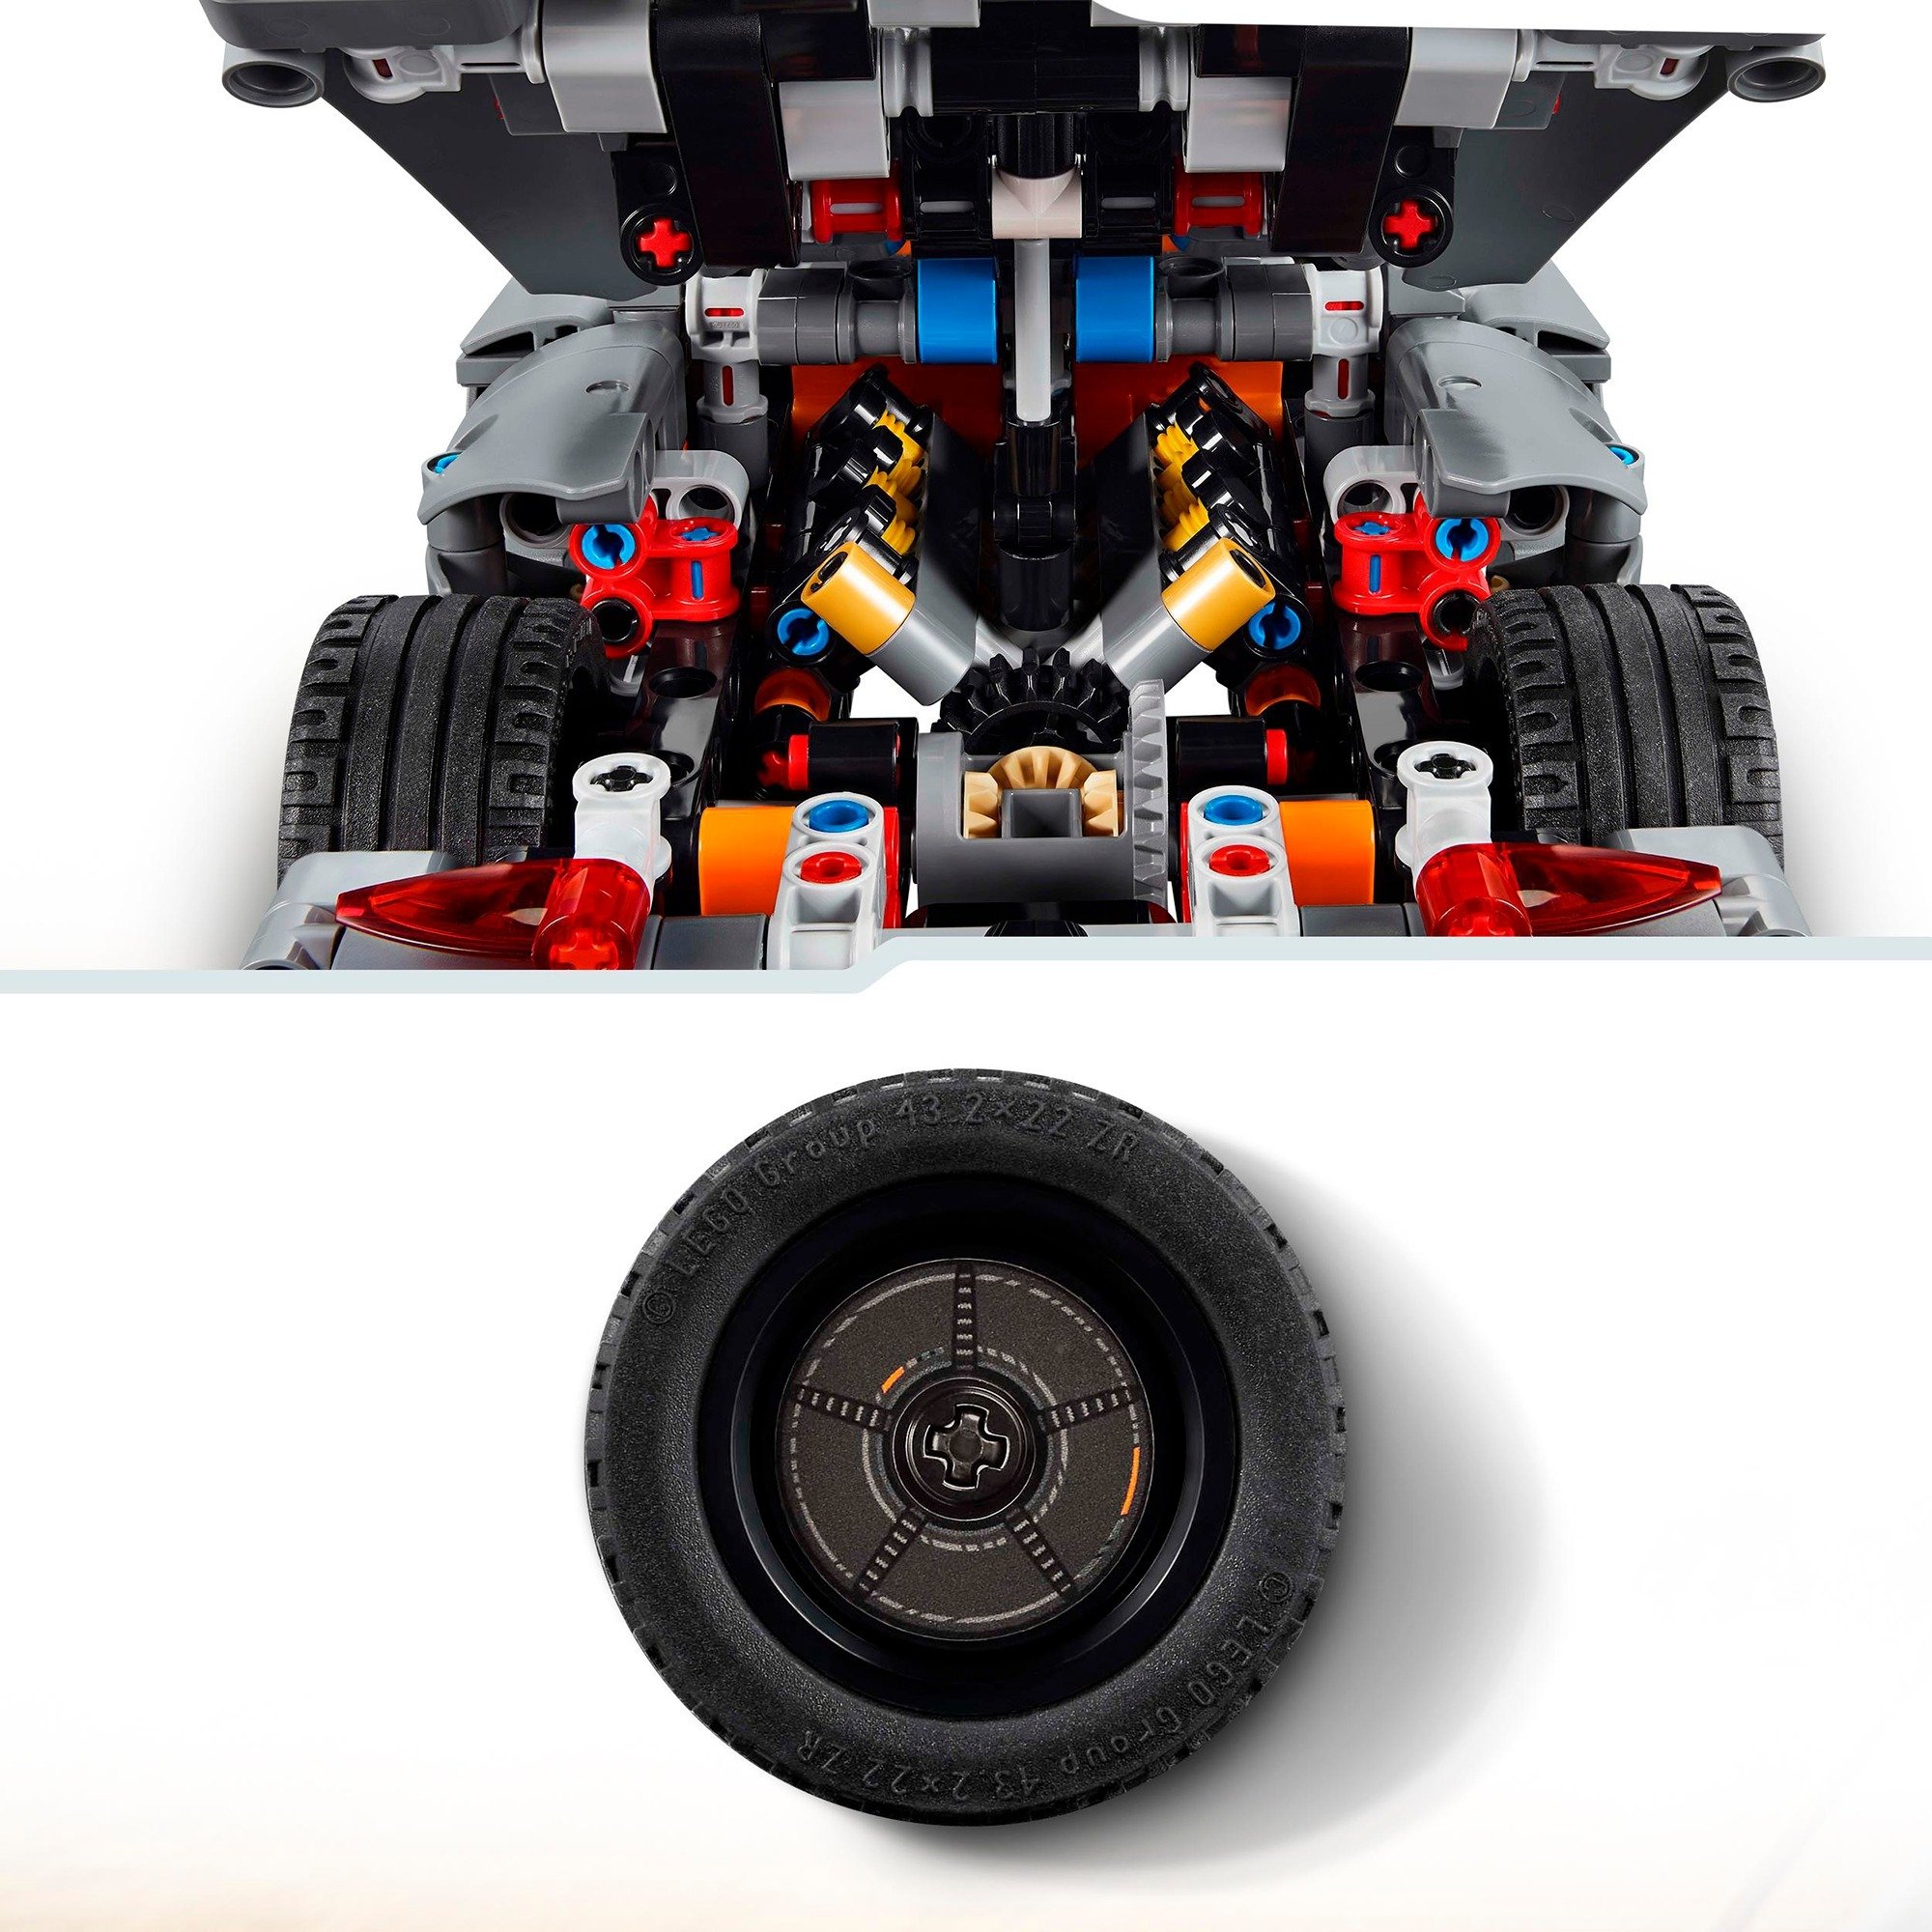 LEGO_42173_Technic_Koenigsegg_Jesko_Abso